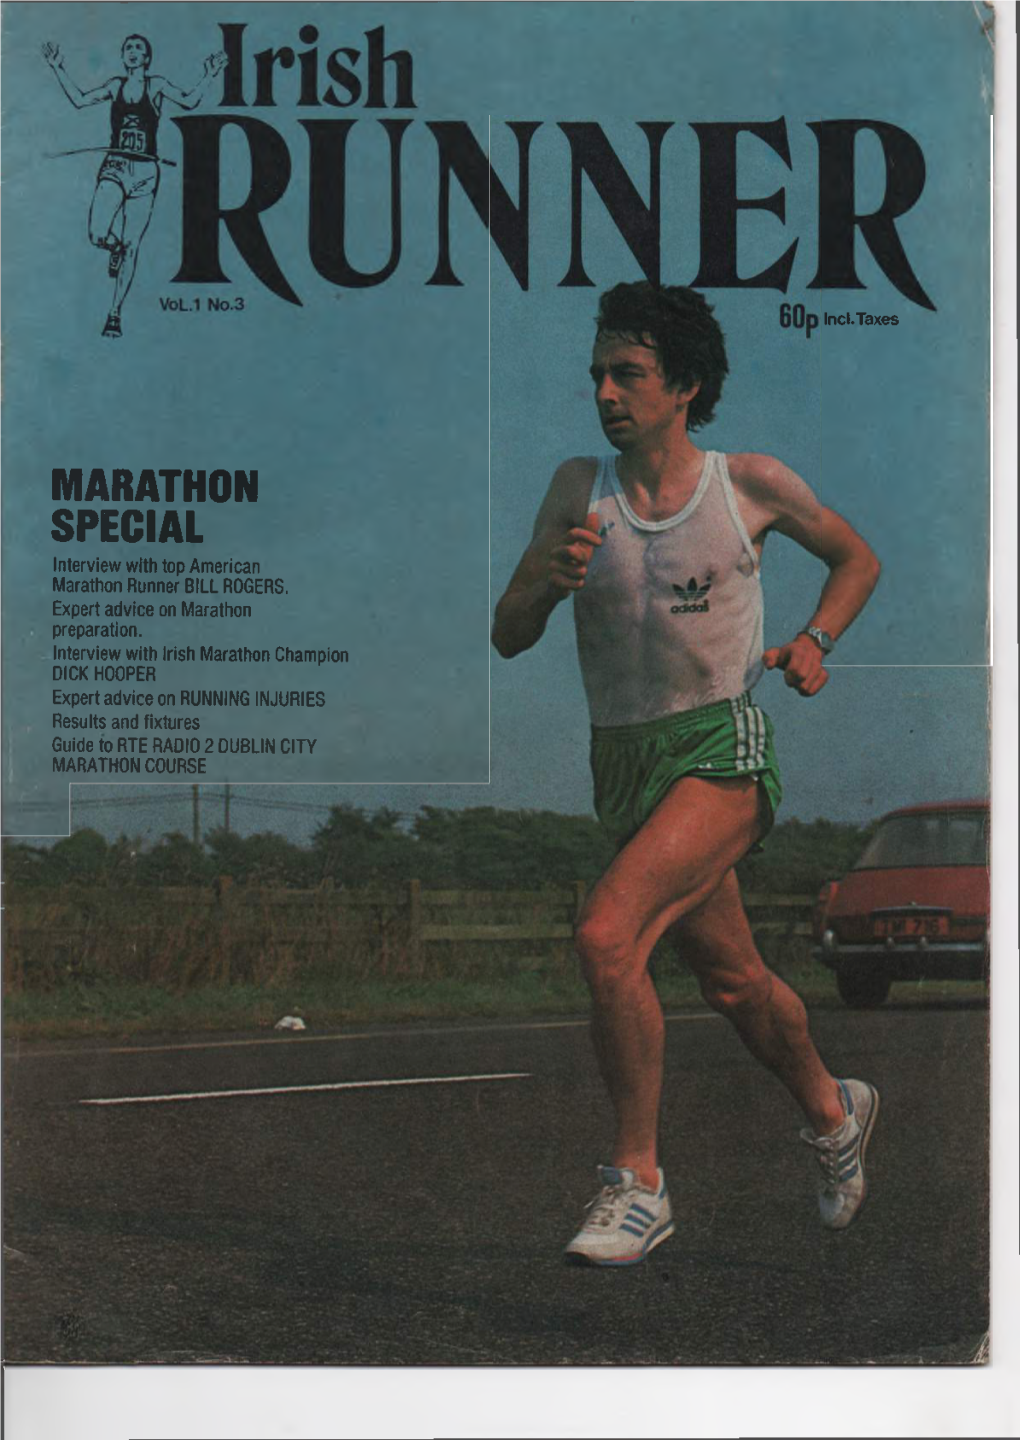 MARATHON SPECIAL Interview with Top American Marathon Runner BILL ROGERS